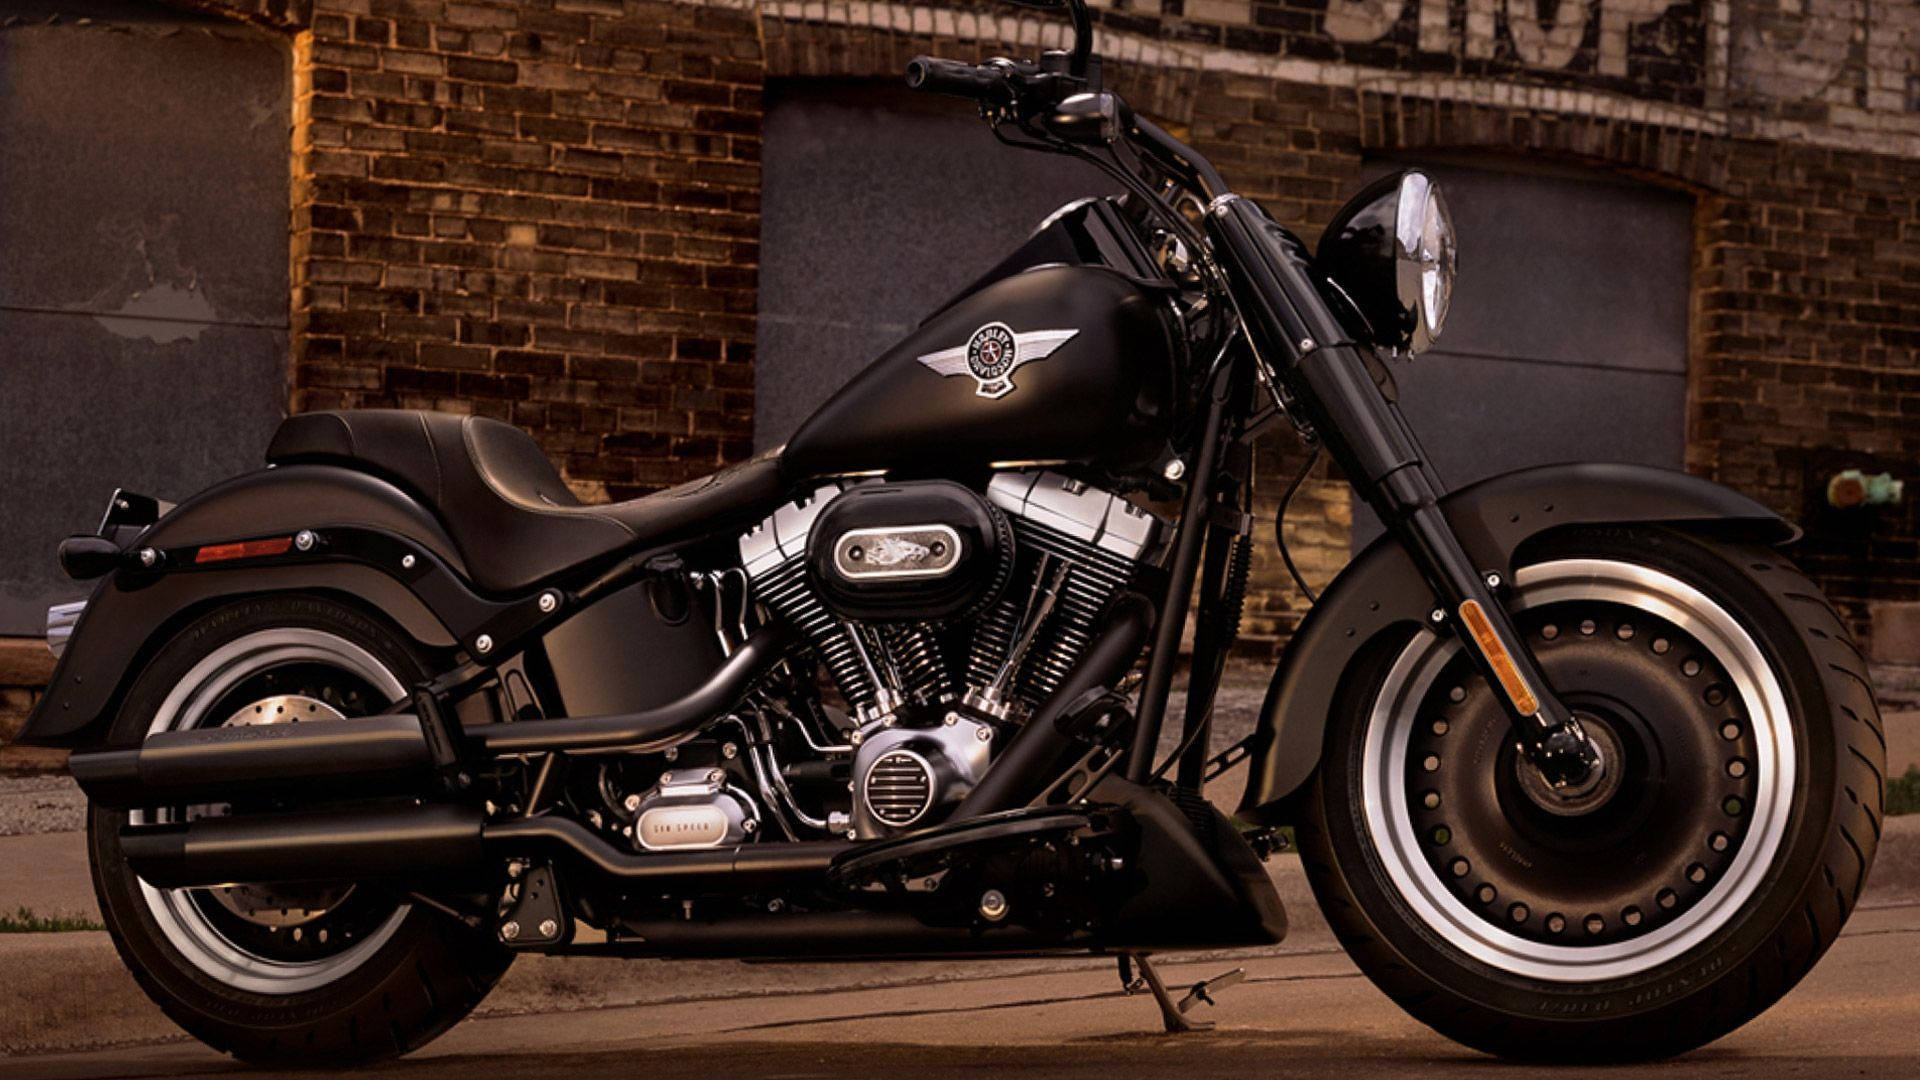 Harley Davidson With Unique Rims